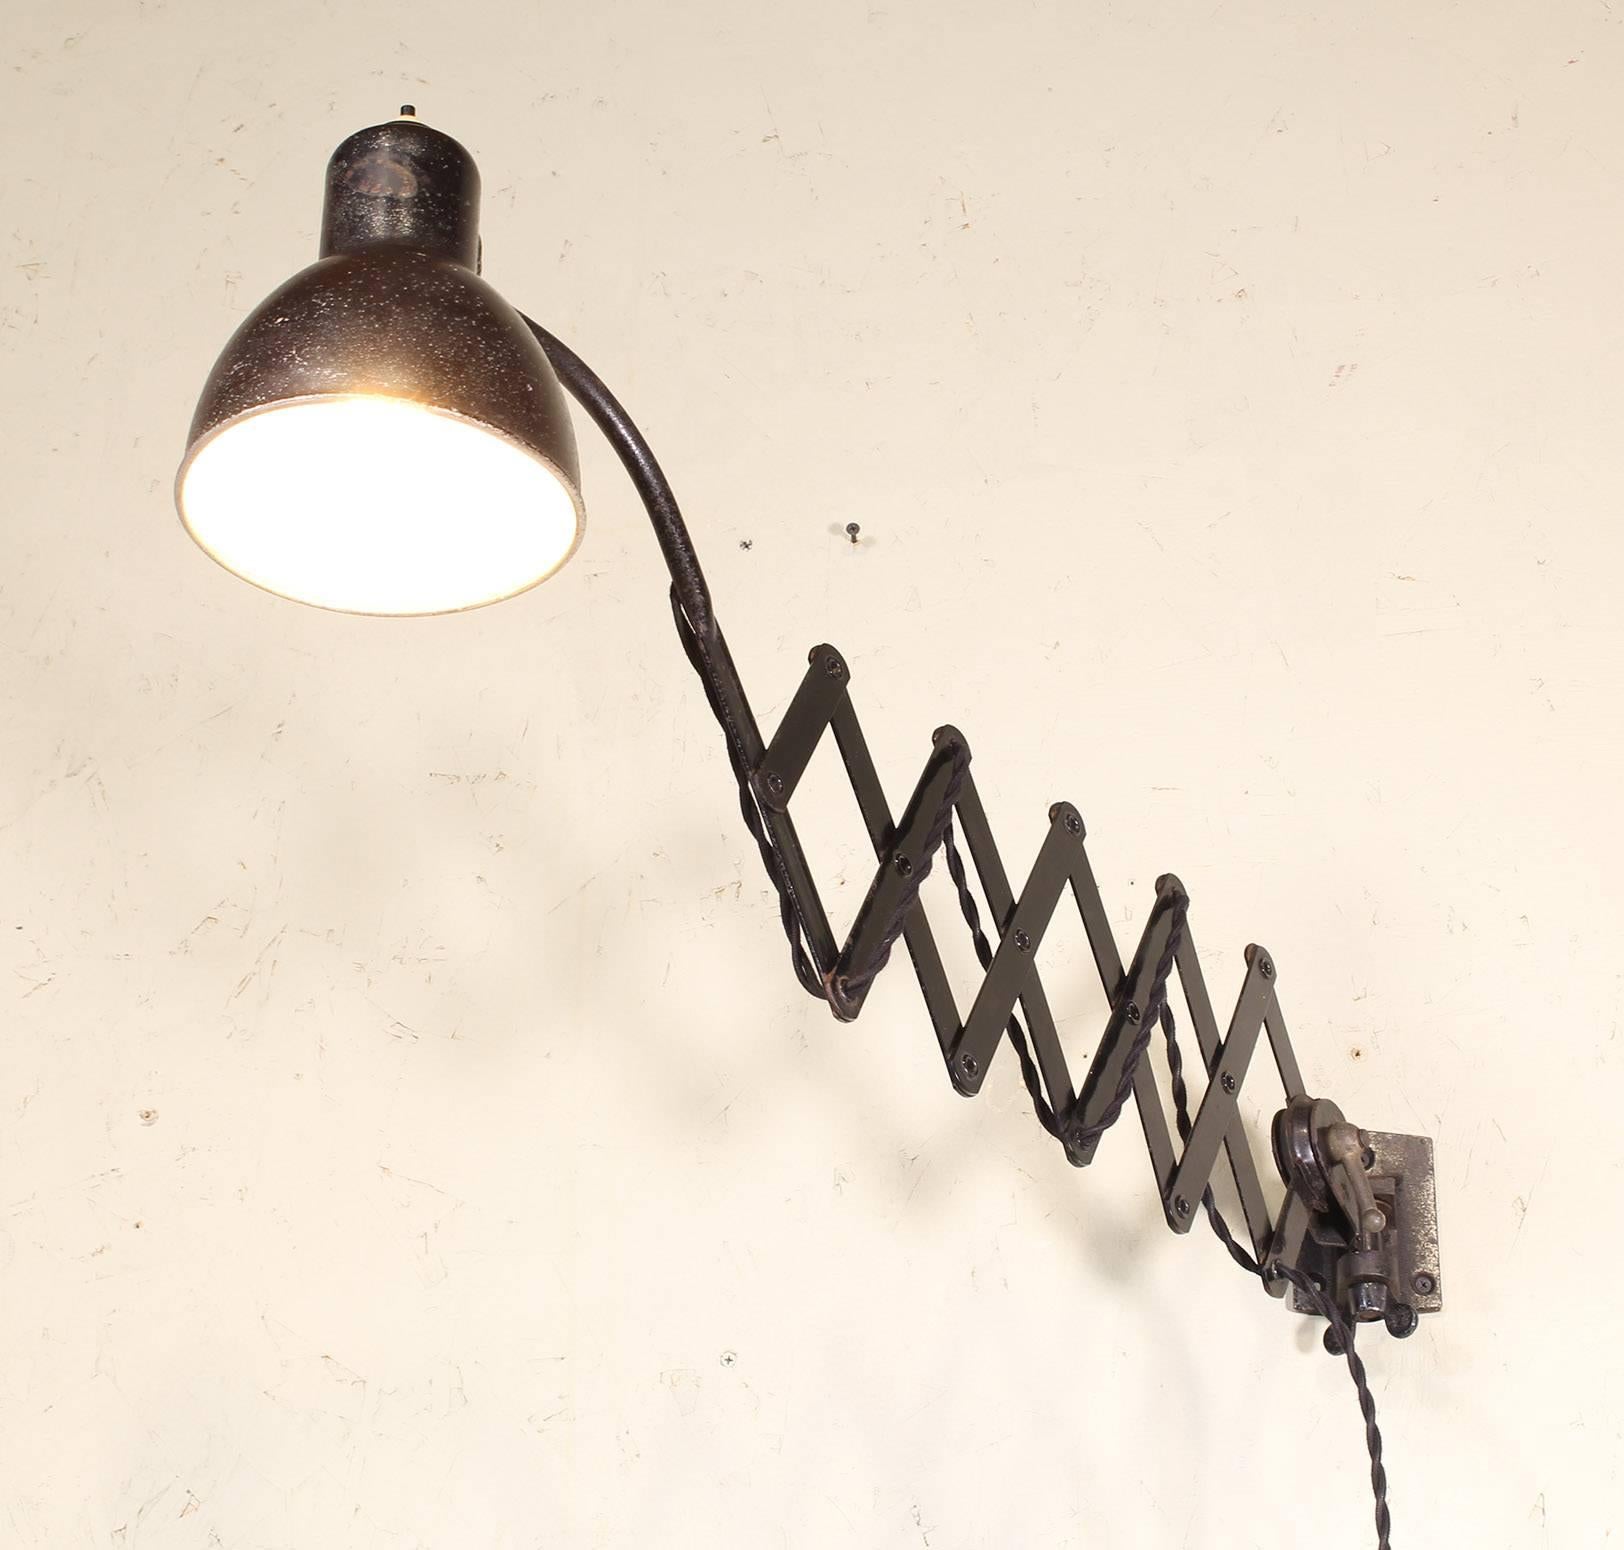 Vintage Industrial style scissor task lamp, light, sconce by Kaiser Idell. Measures: Shade diameter - 6